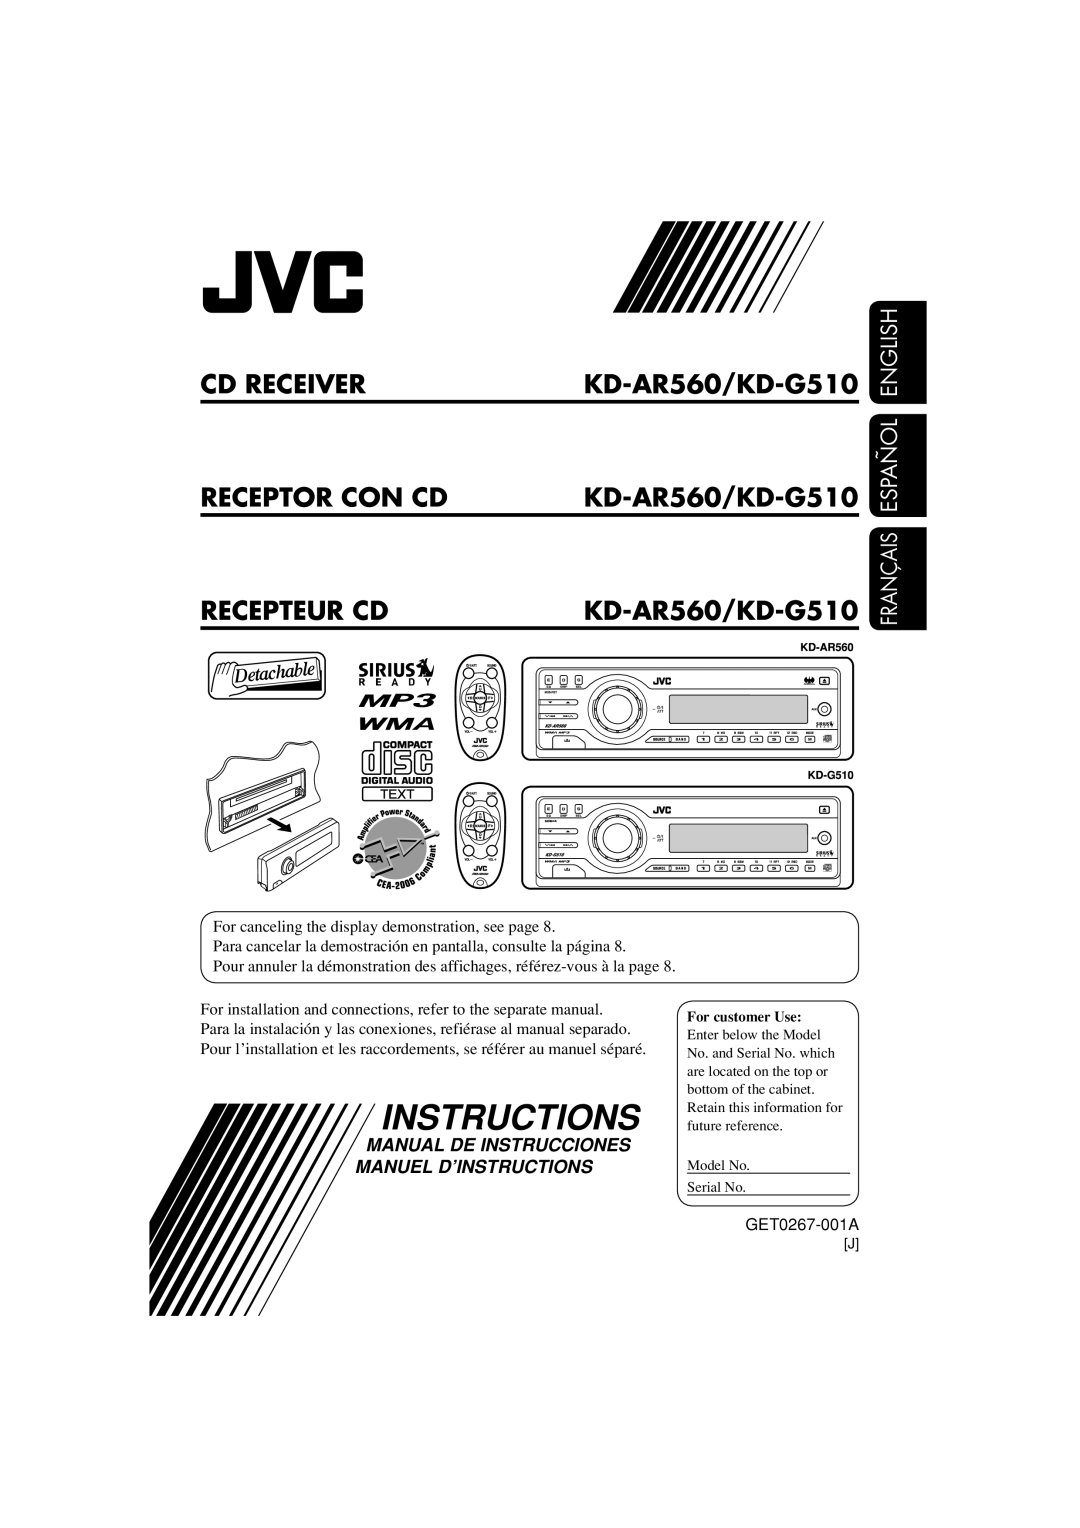 JVC manual Cd Receiver Receptor Con Cd Recepteur Cd, KD-AR560/KD-G510 KD-AR560/KD-G510, Français Español English 